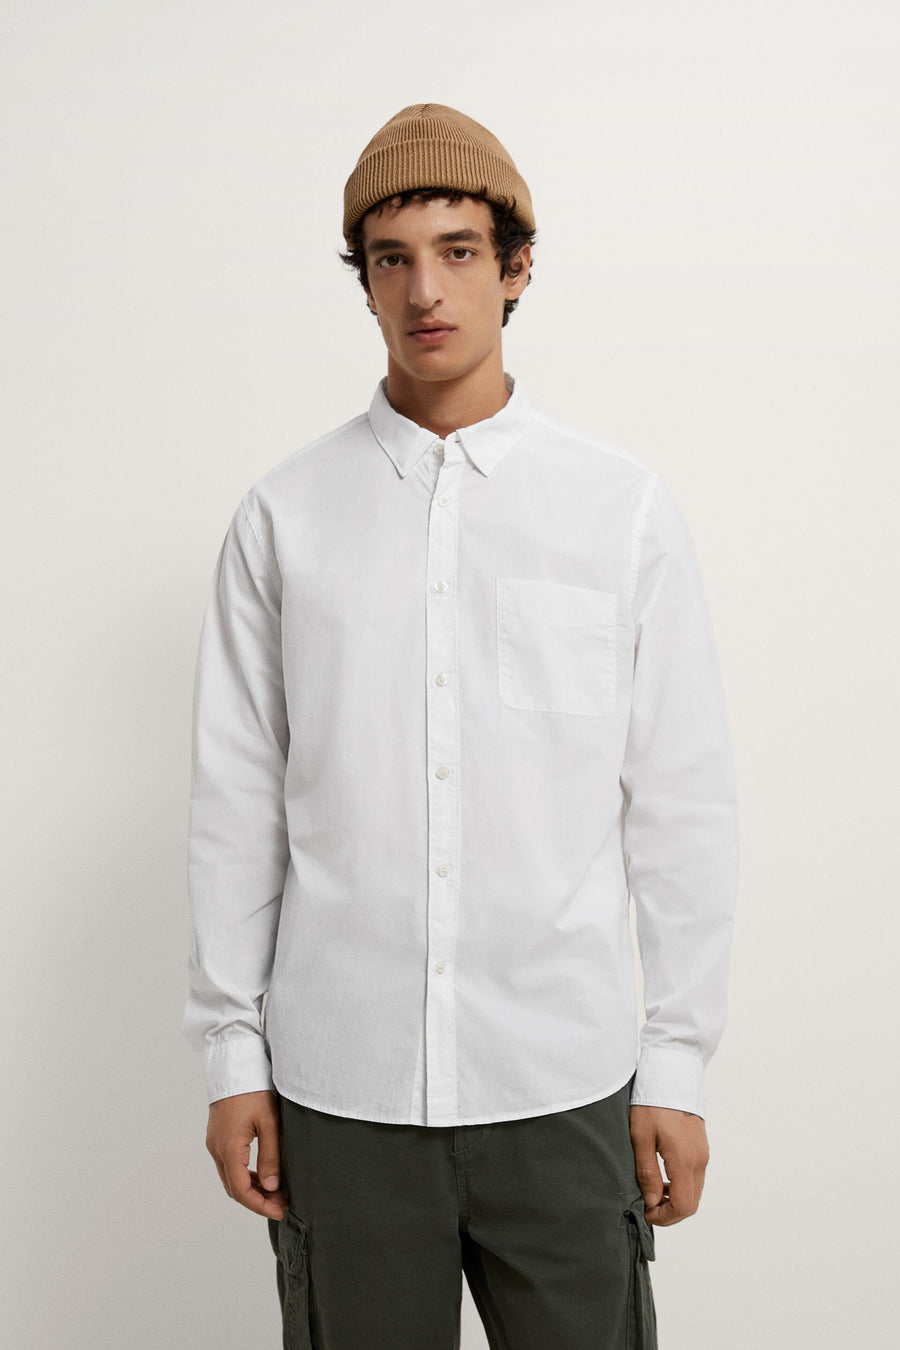 ZaraMan Casual L/S Plain Shirt 6917/375/250